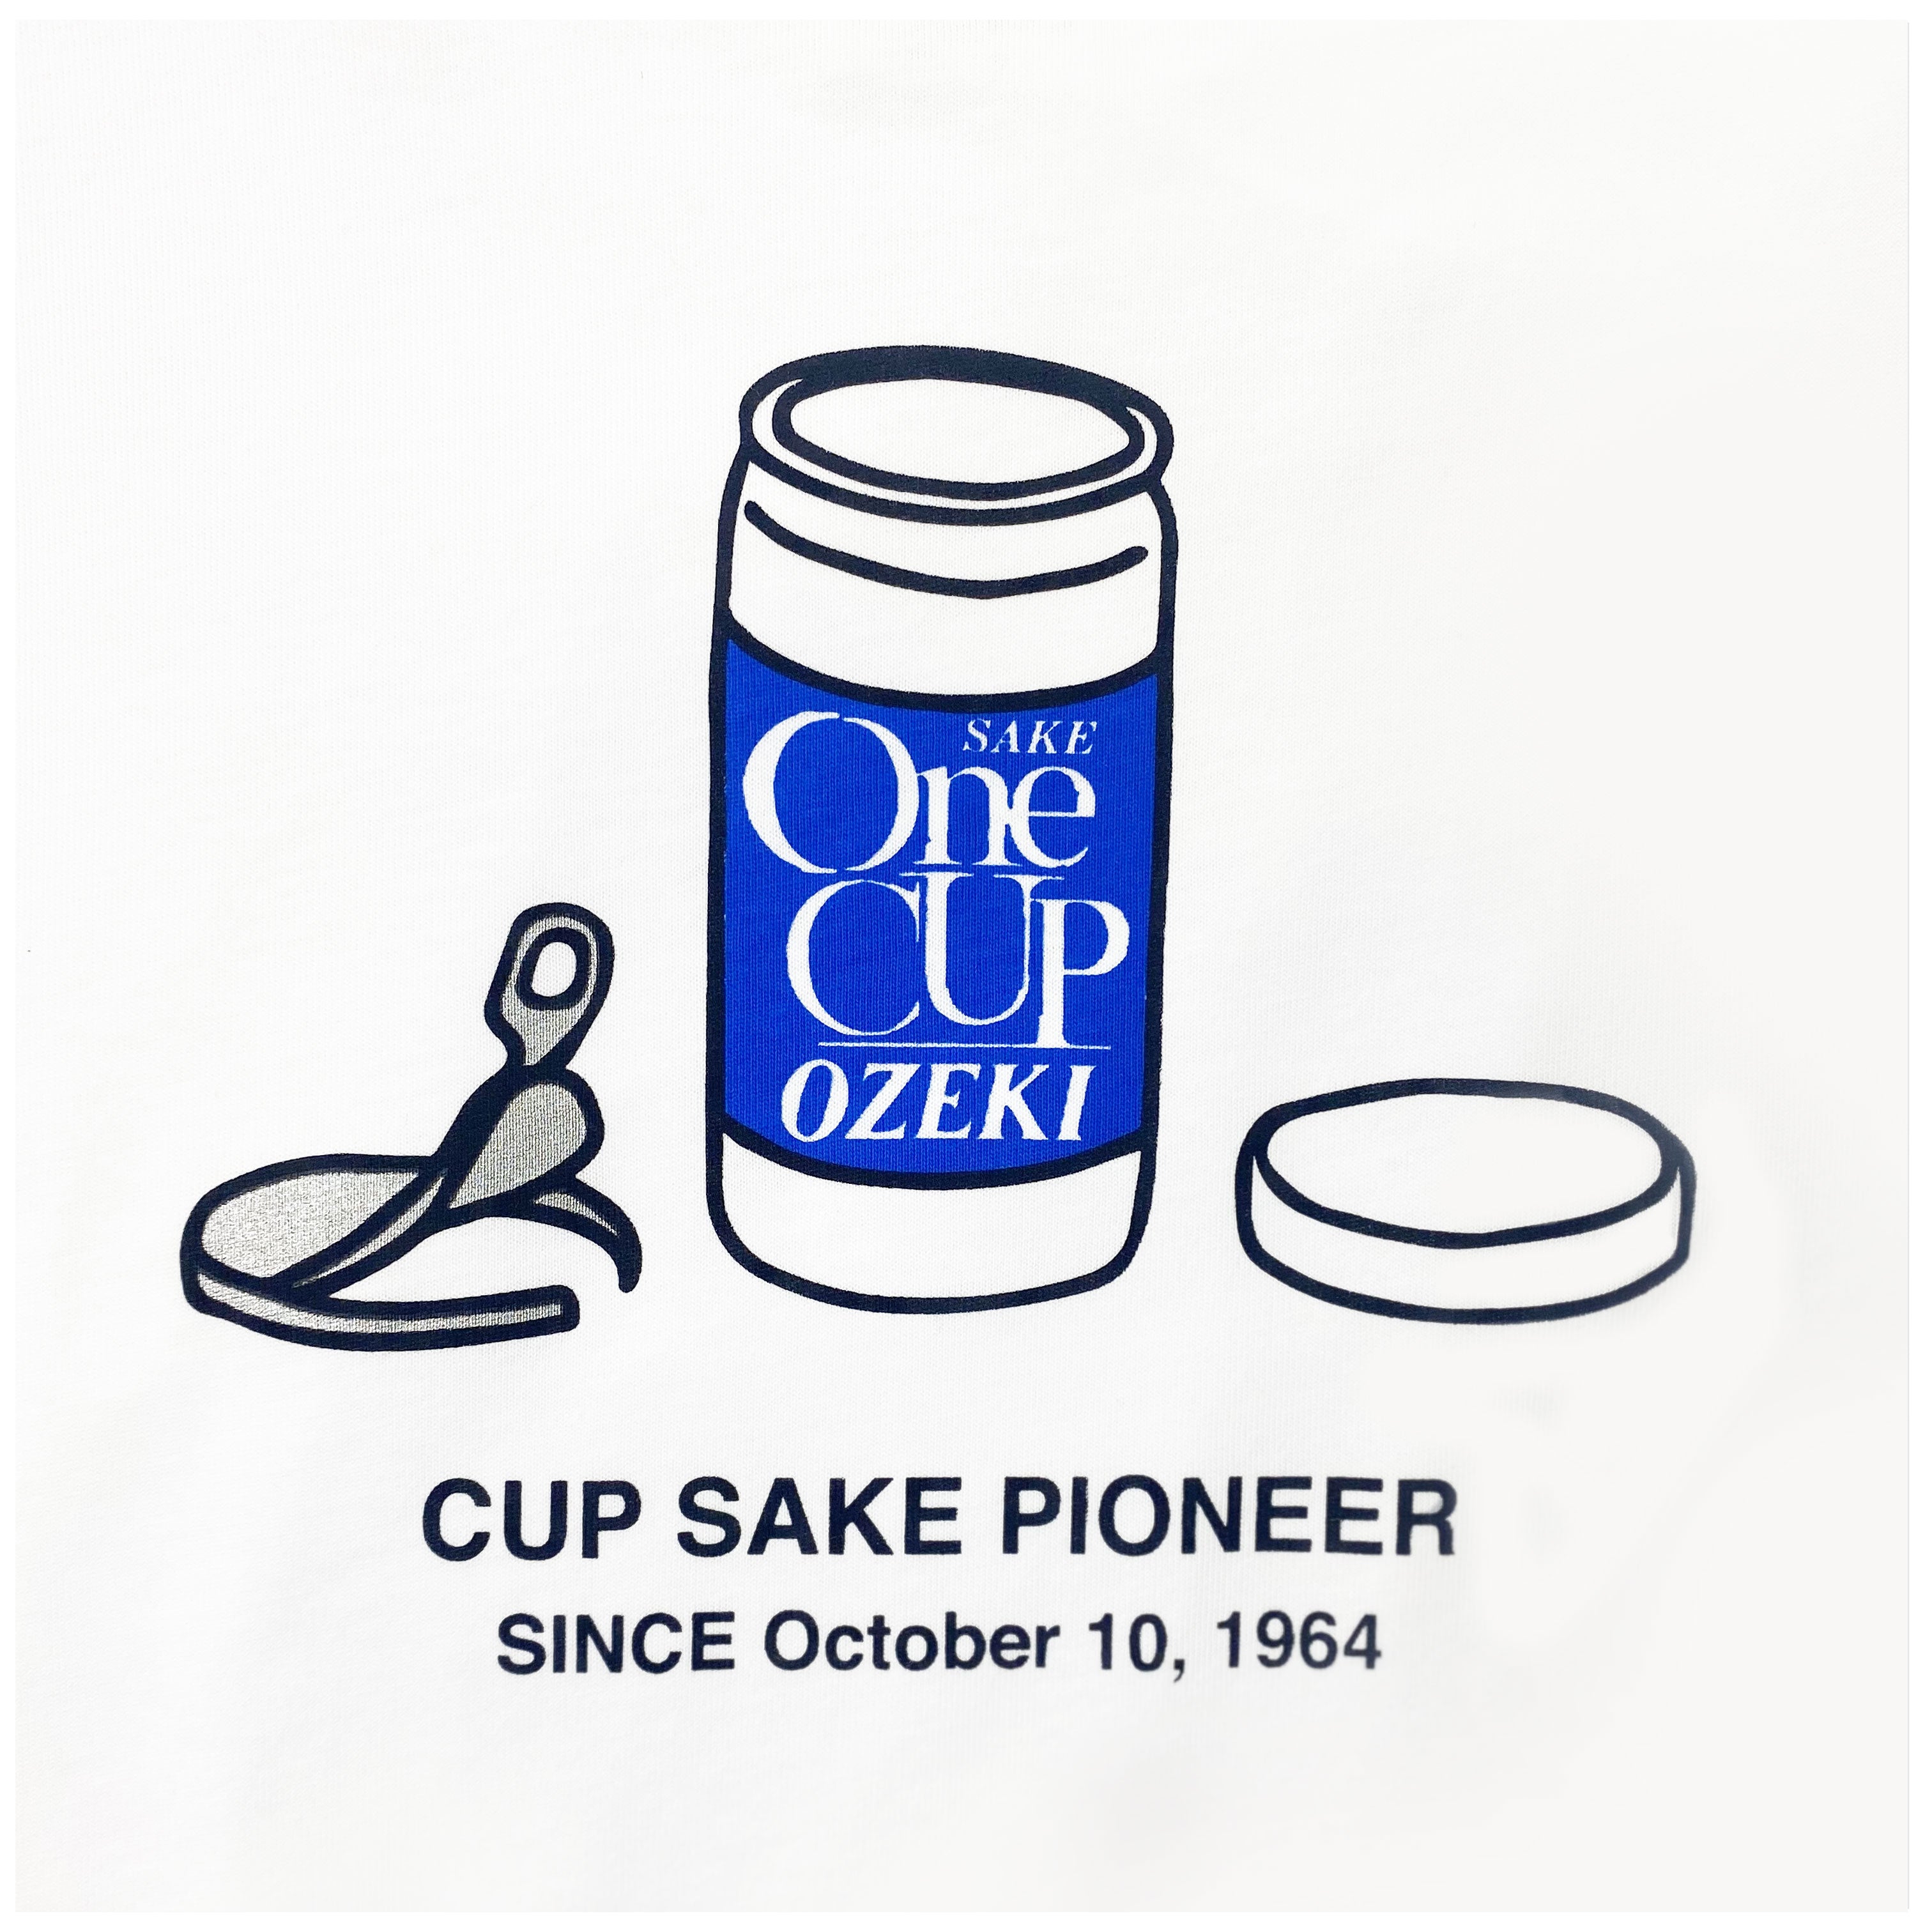 Ozeki One Cup T-shirt